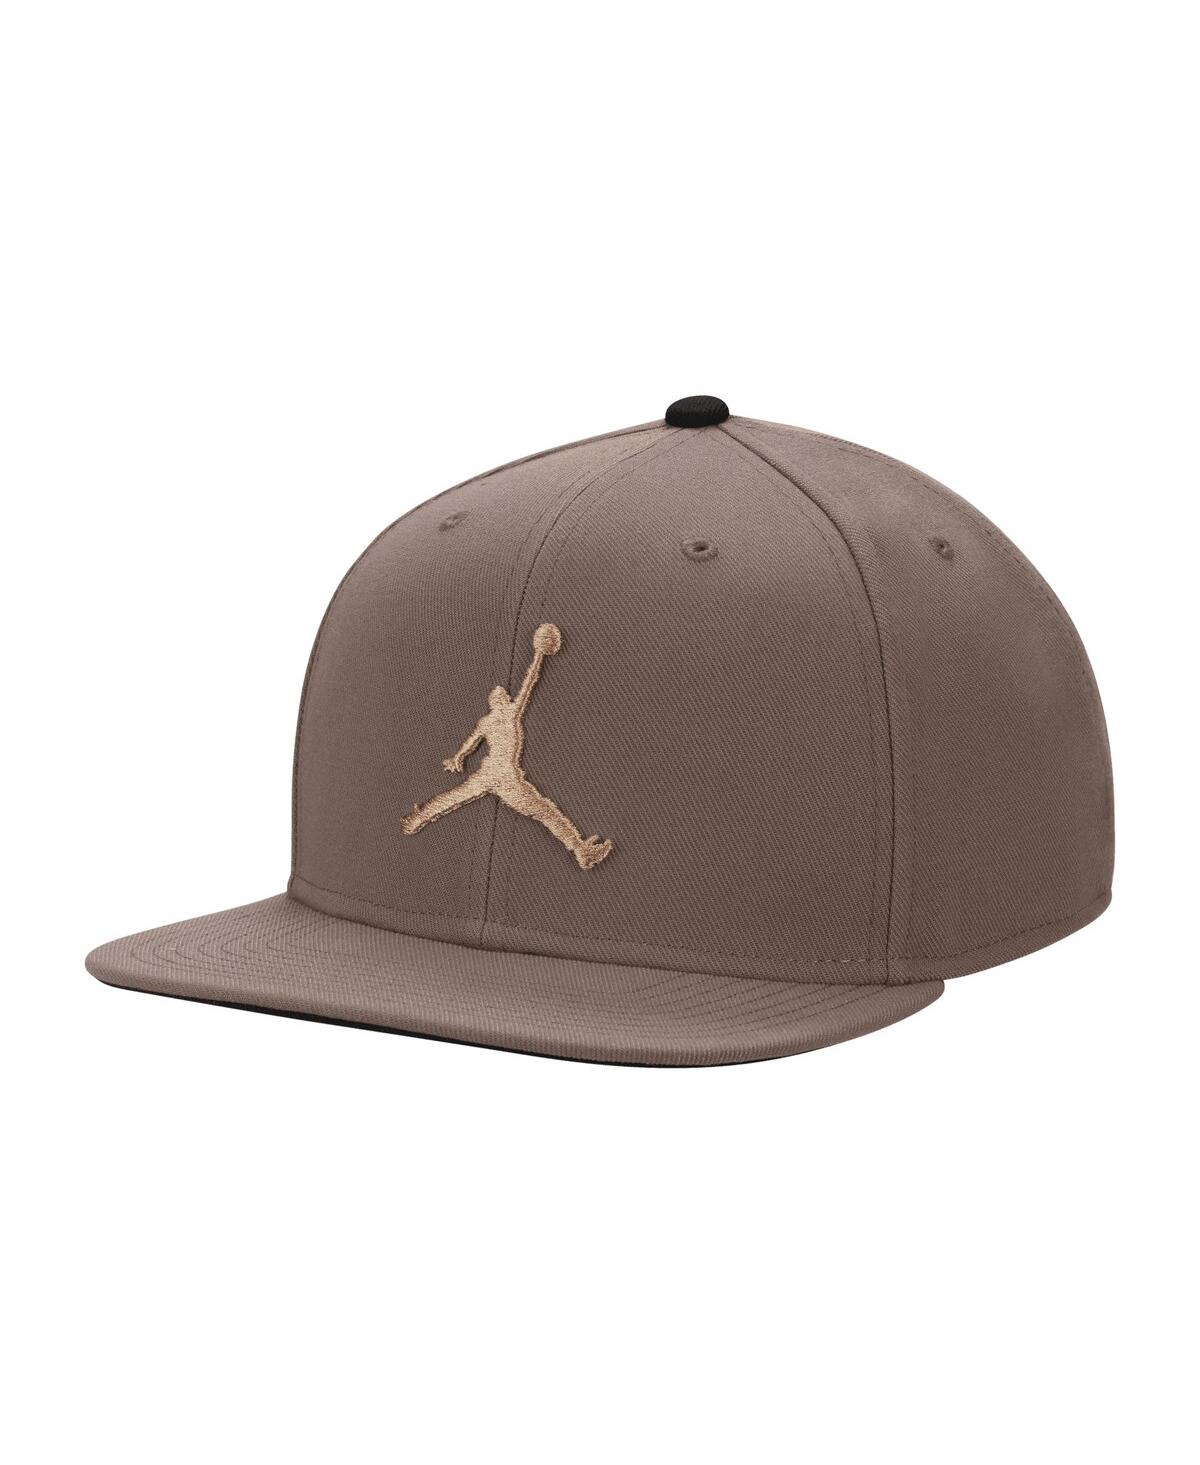 Shop Jordan Men's  Brown Pro Jumpman Snapback Hat